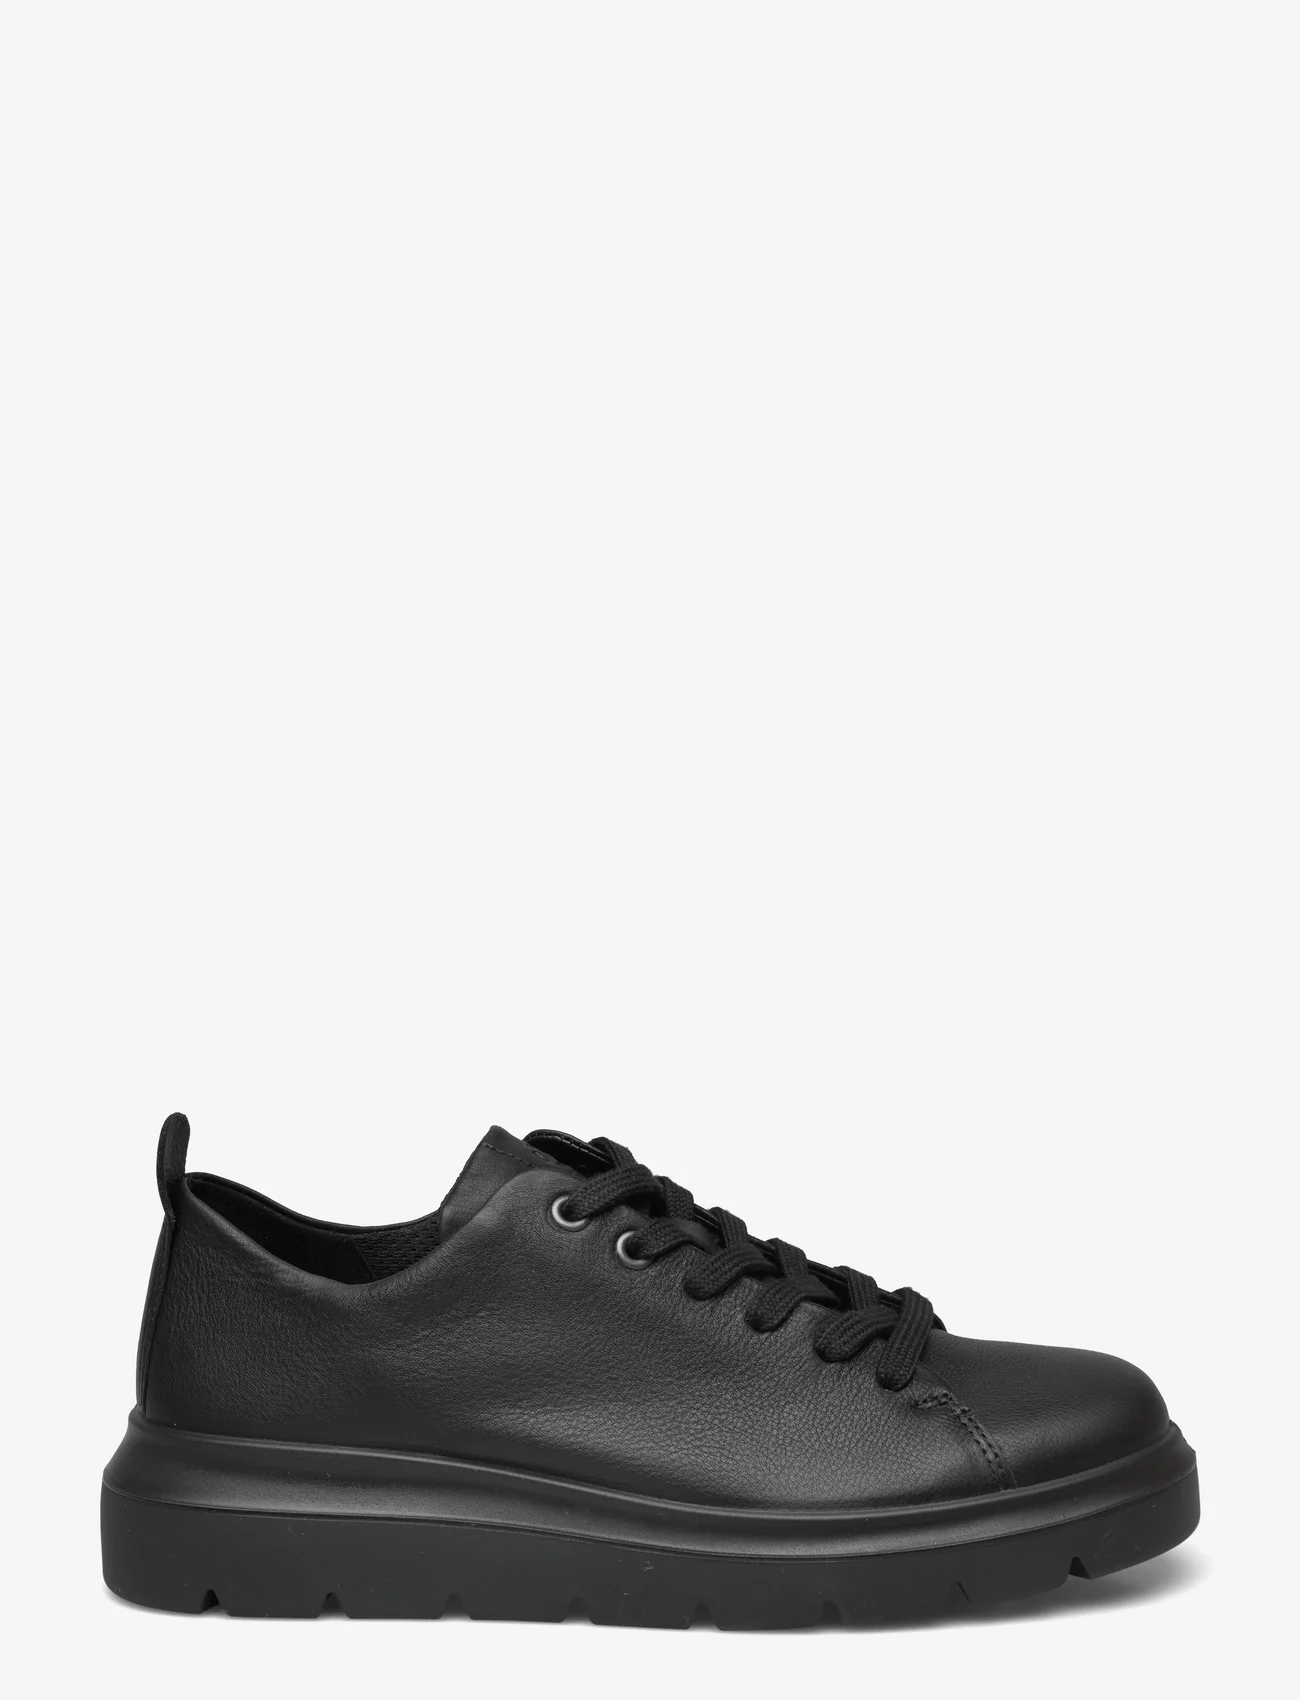 ECCO - NOUVELLE - low top sneakers - black - 1